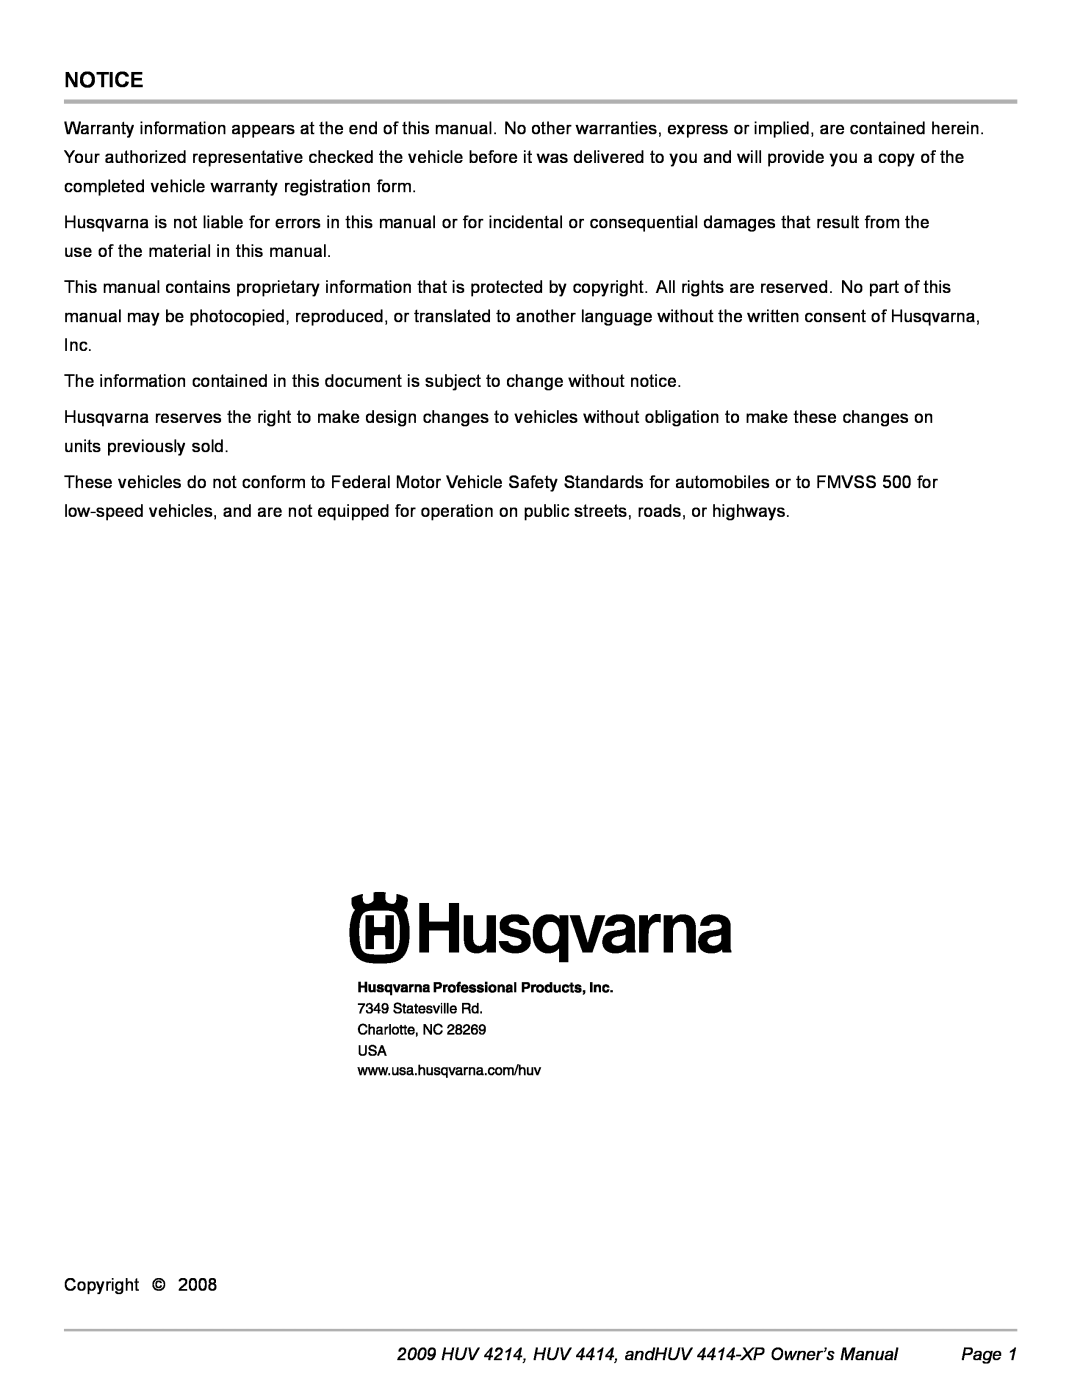 Husqvarna owner manual HUV 4214, HUV 4414, andHUV 4414-XP Owner’s Manual, Page, Copyright 